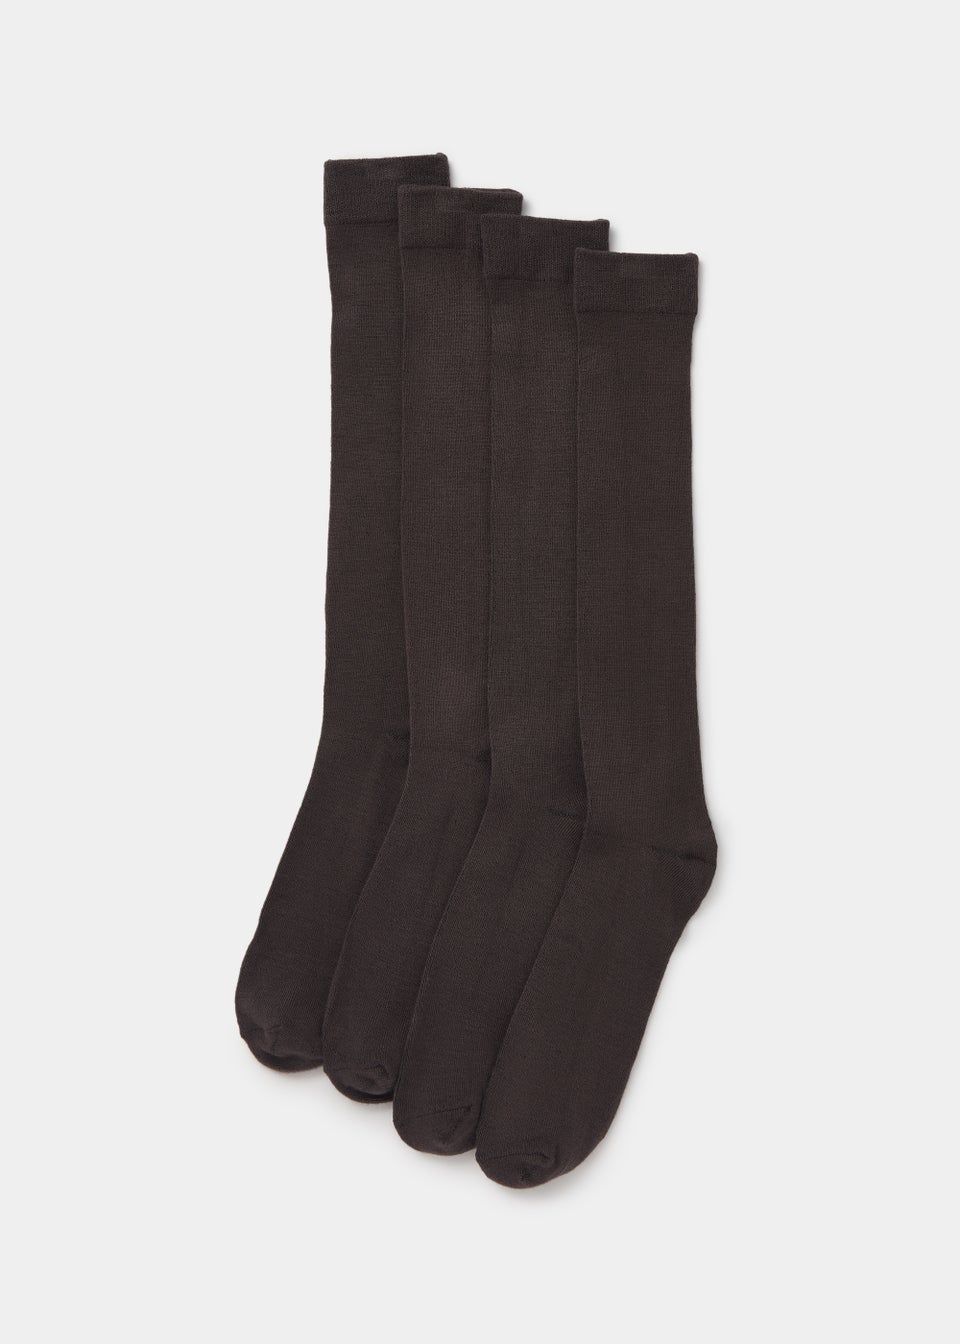 2 Pack Grey Knee High Socks - Matalan